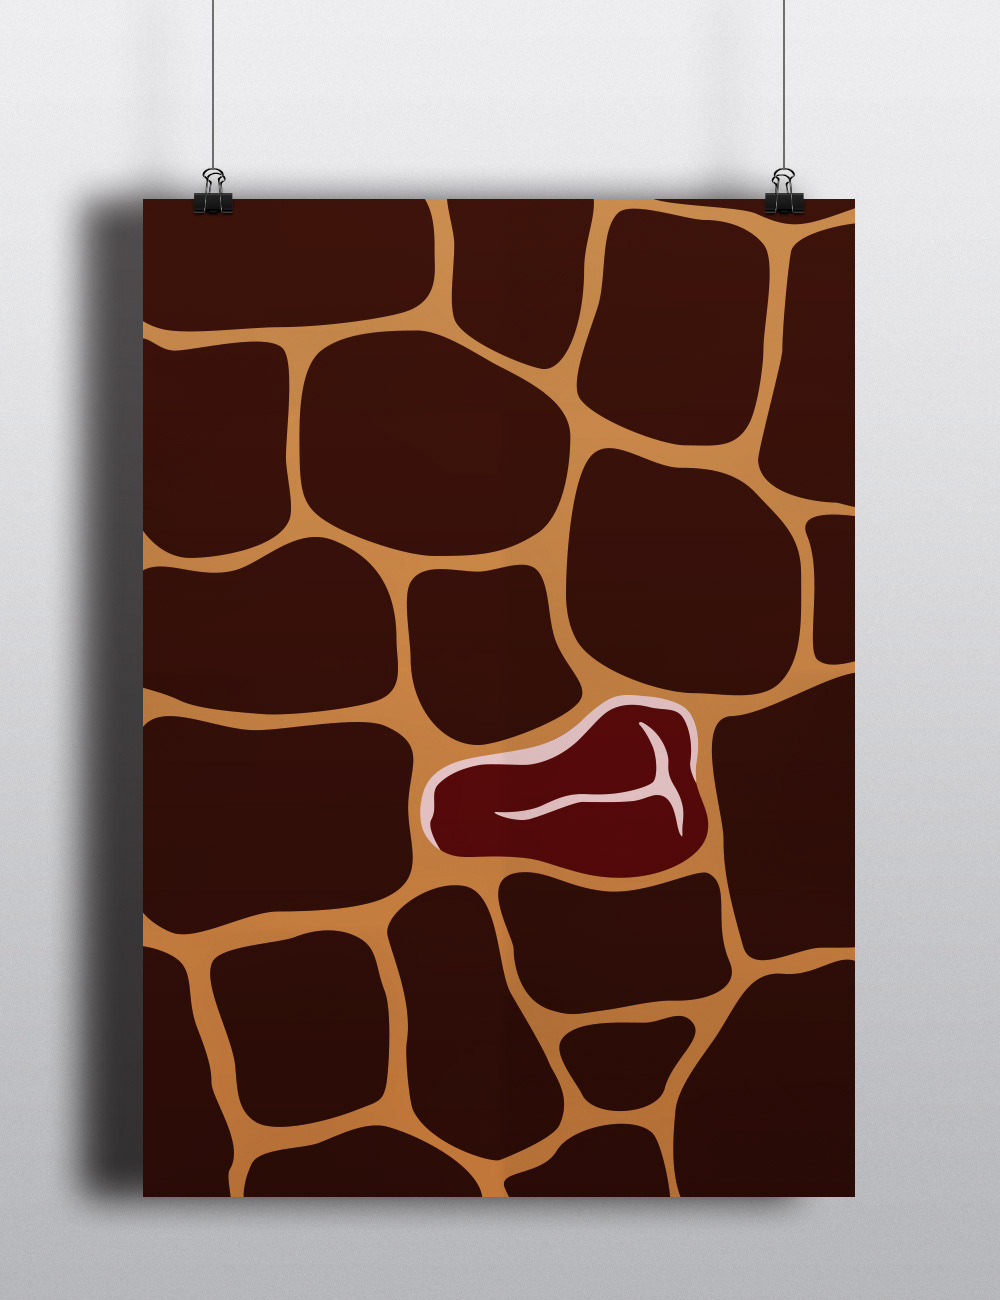 Illustrator school giraffe graphic design vector 4 colors